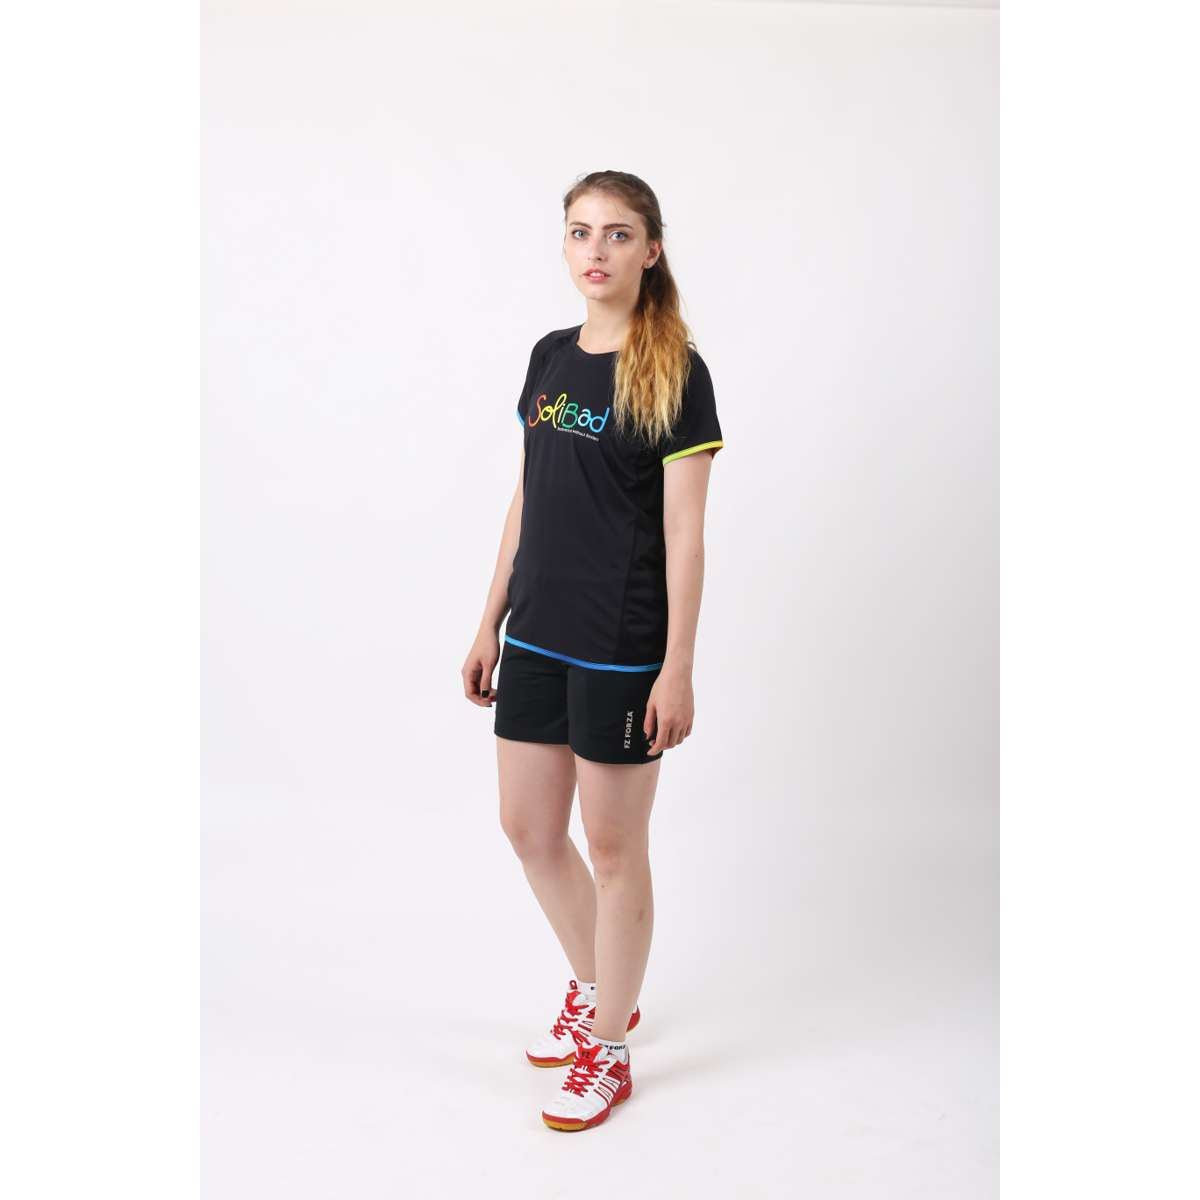 FZ Forza Bulgur Solibad Badminton T-Shirt